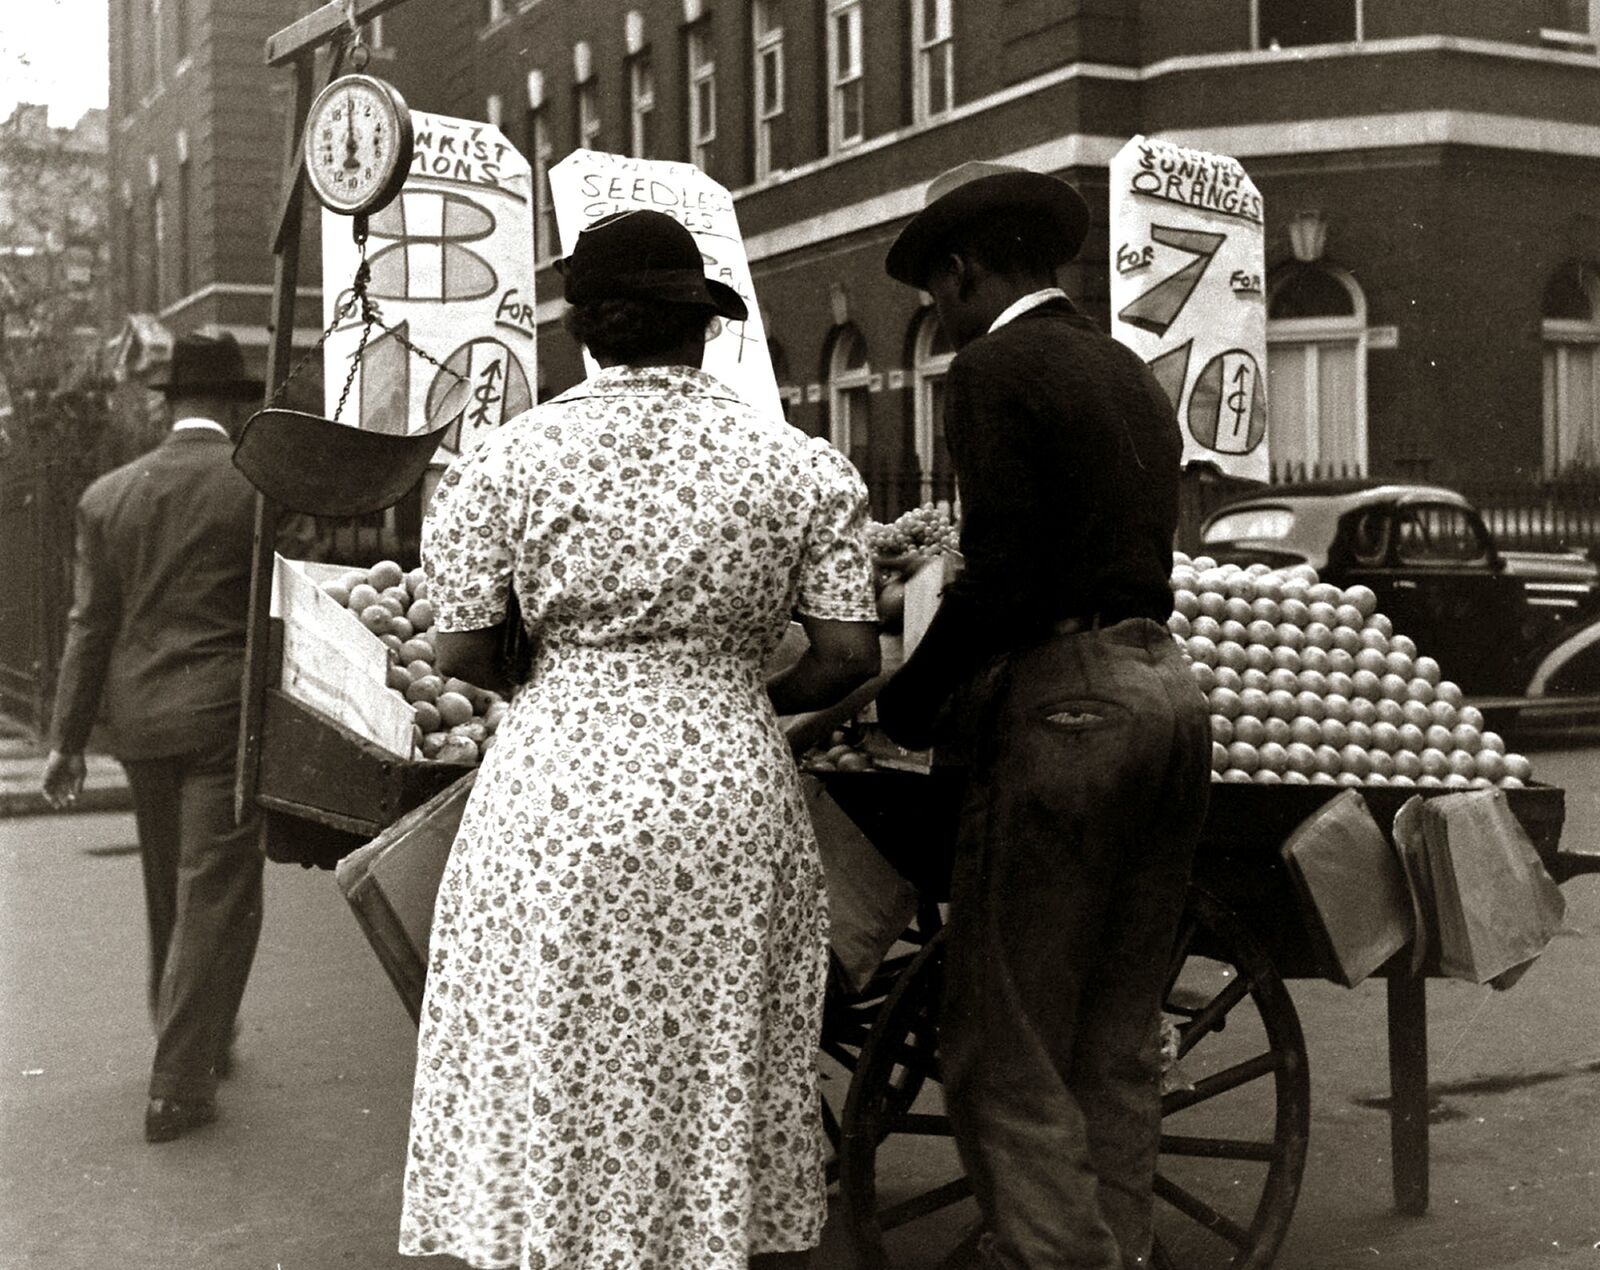 1930s HARLEM STREET CITRUS STAND 8.5x11 Photo